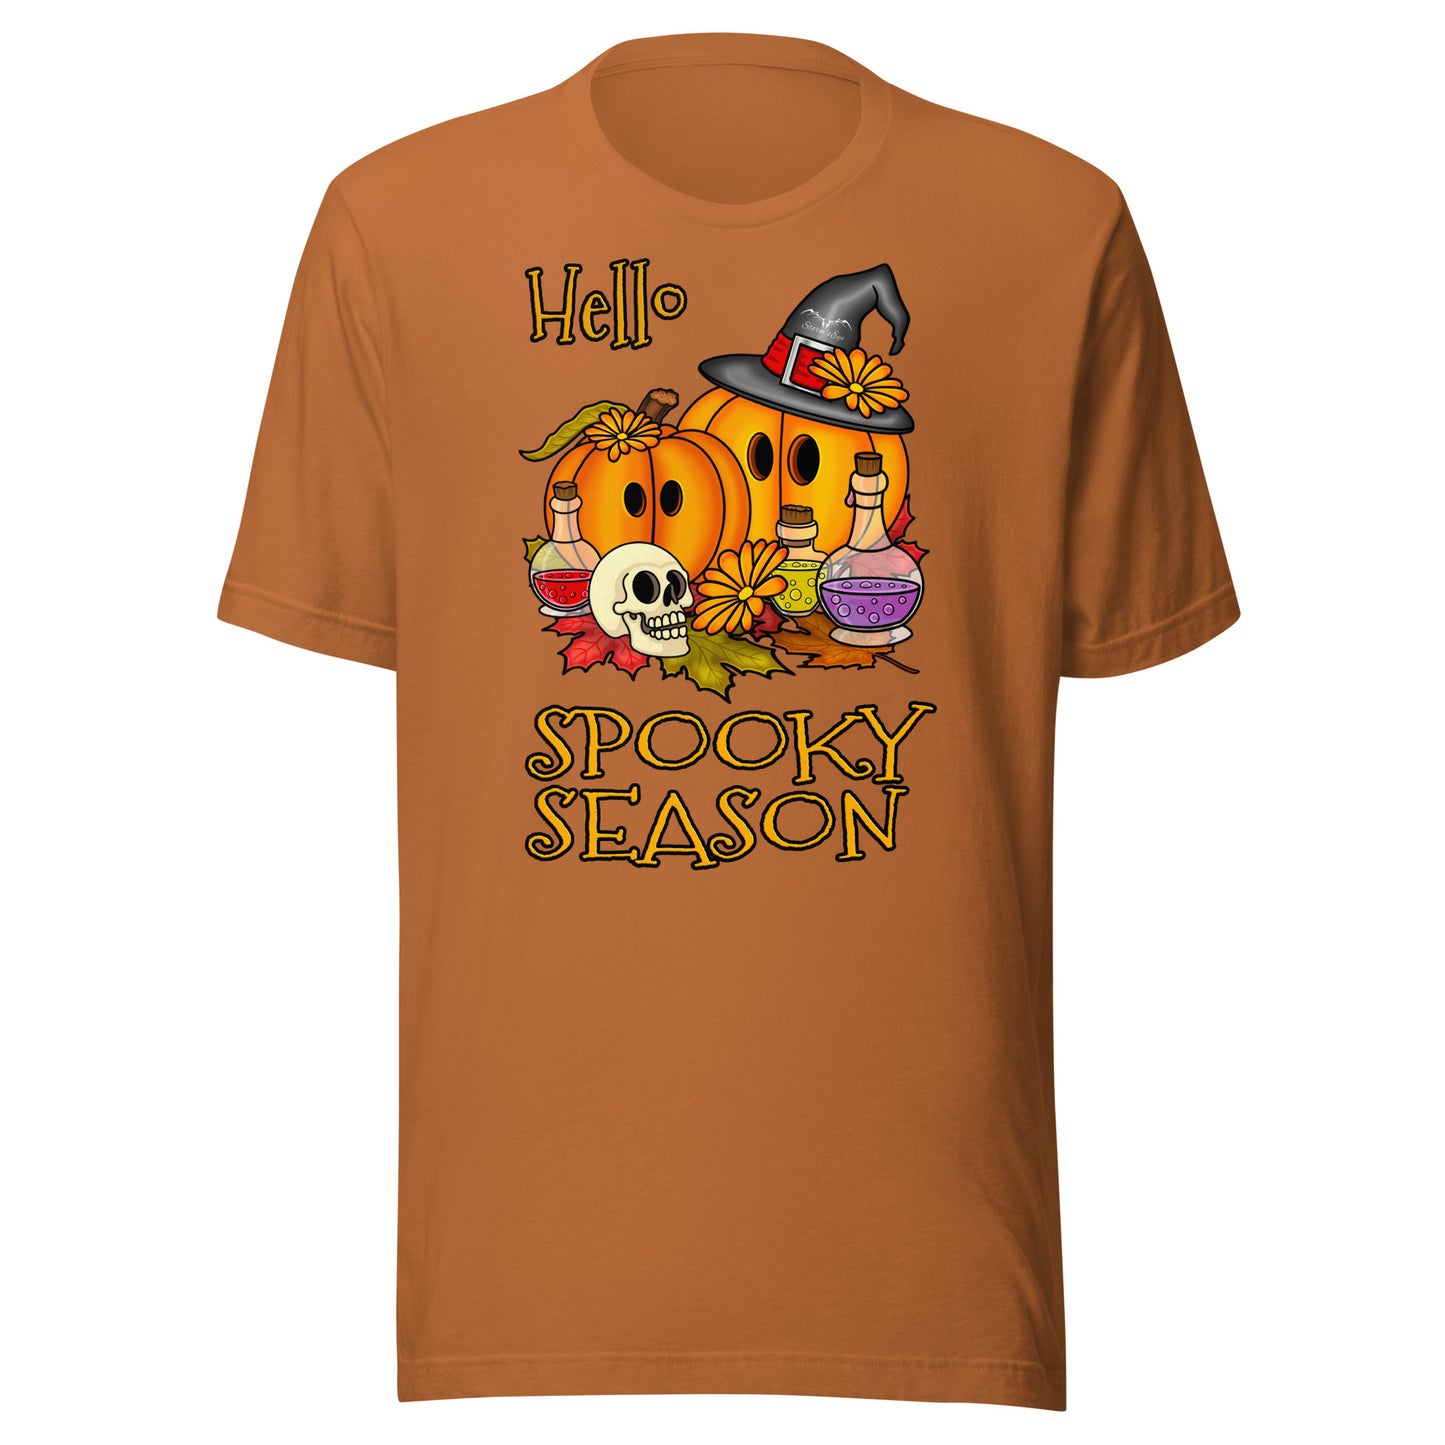 stormseye design hello spooky season halloween T shirt flat view orange